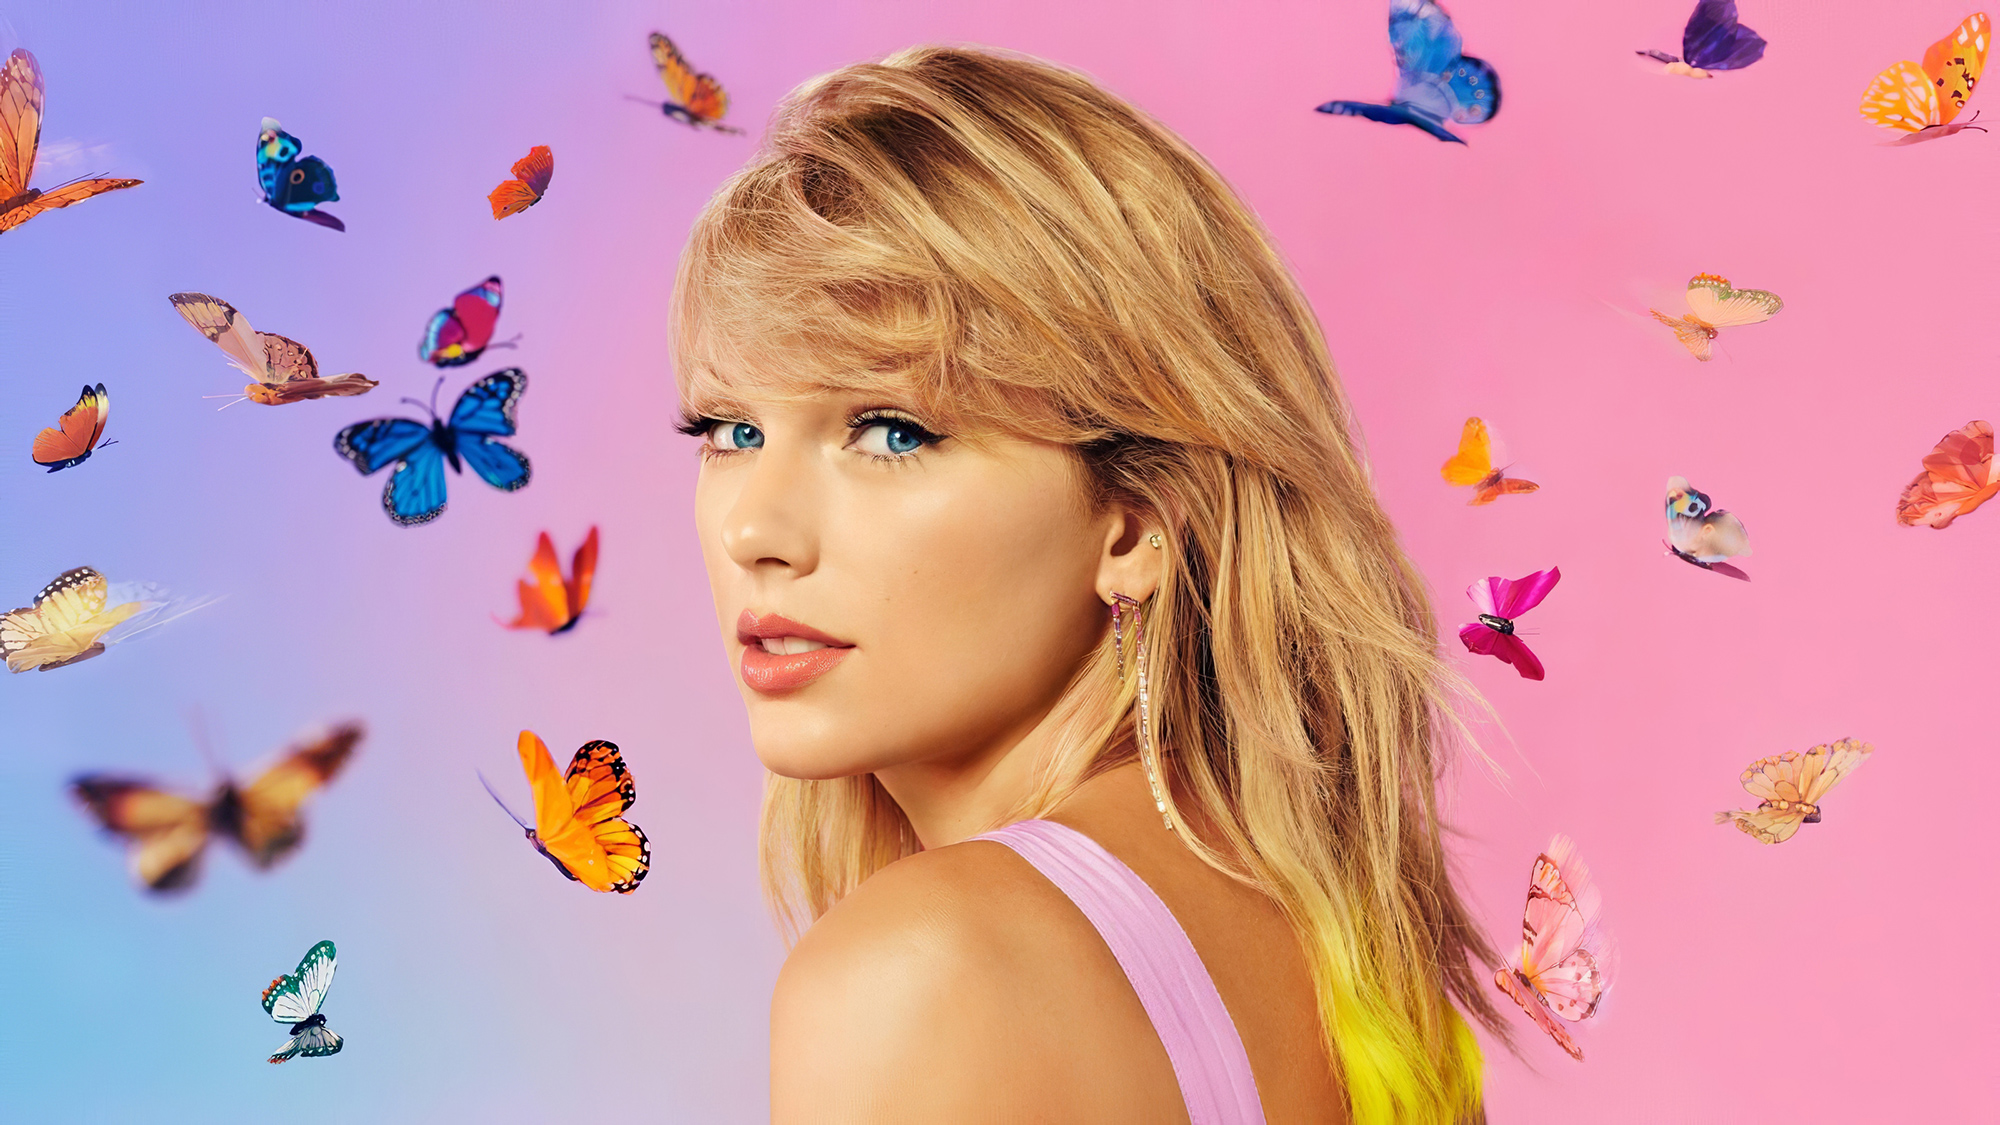 Wallpapers Taylor Swift music celebrities on the desktop